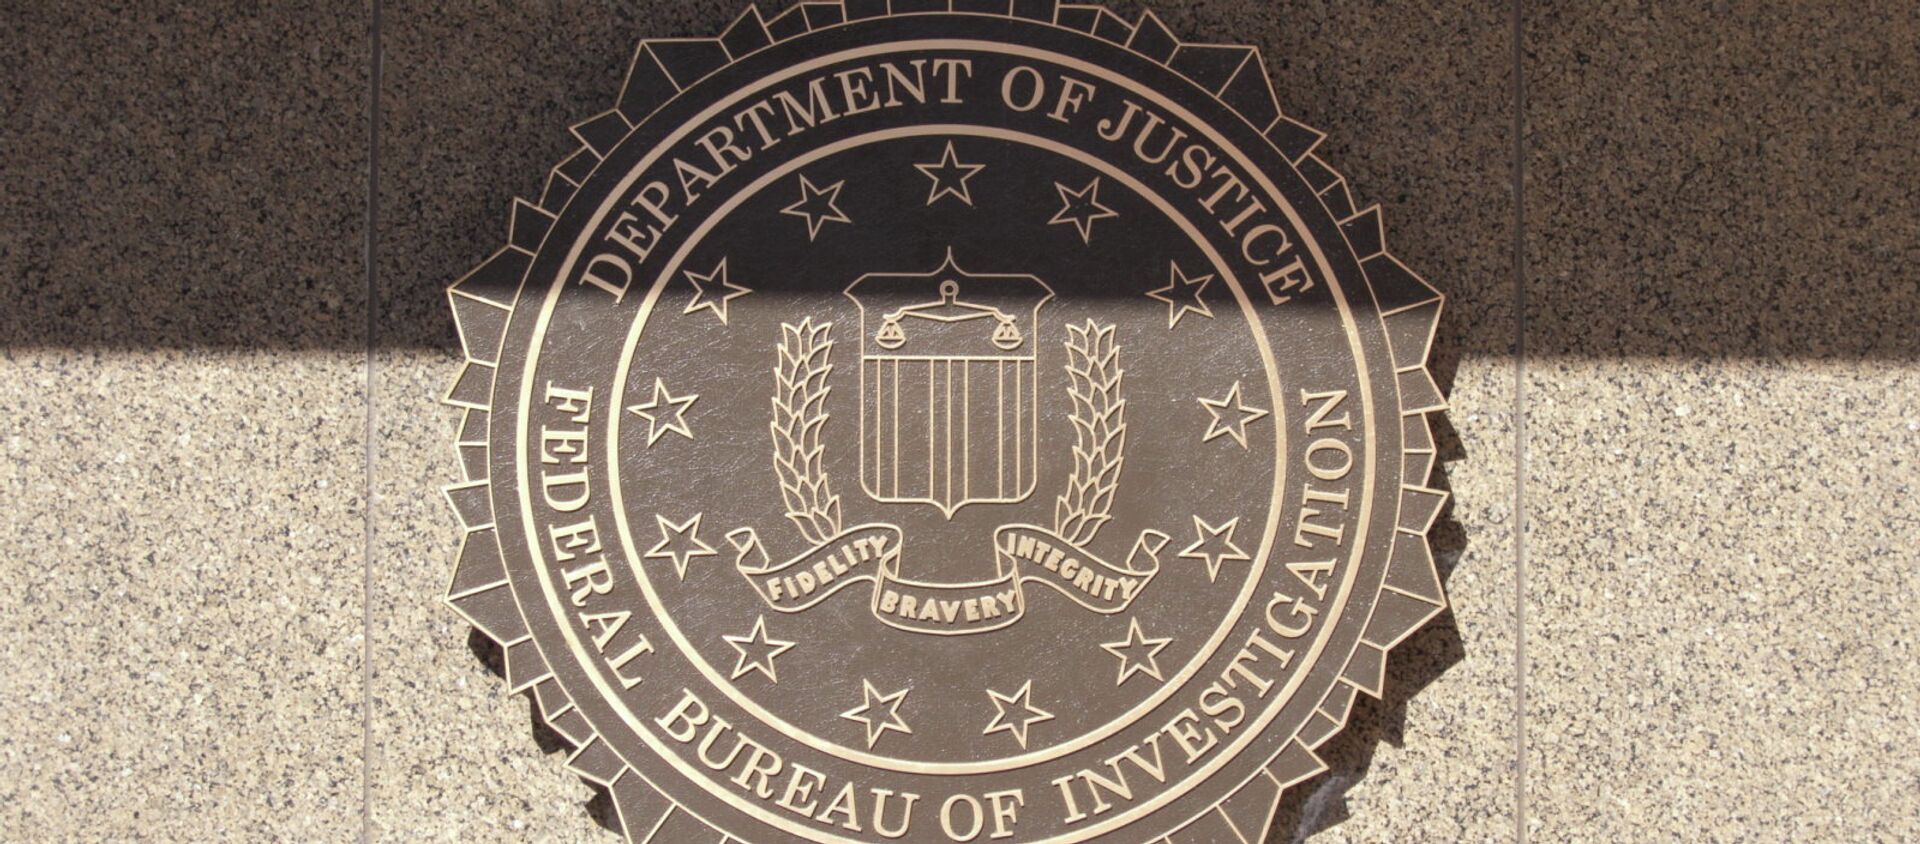 FBI Emblem, J. Edgar Hoover FBI Building - Sputnik International, 1920, 09.07.2021